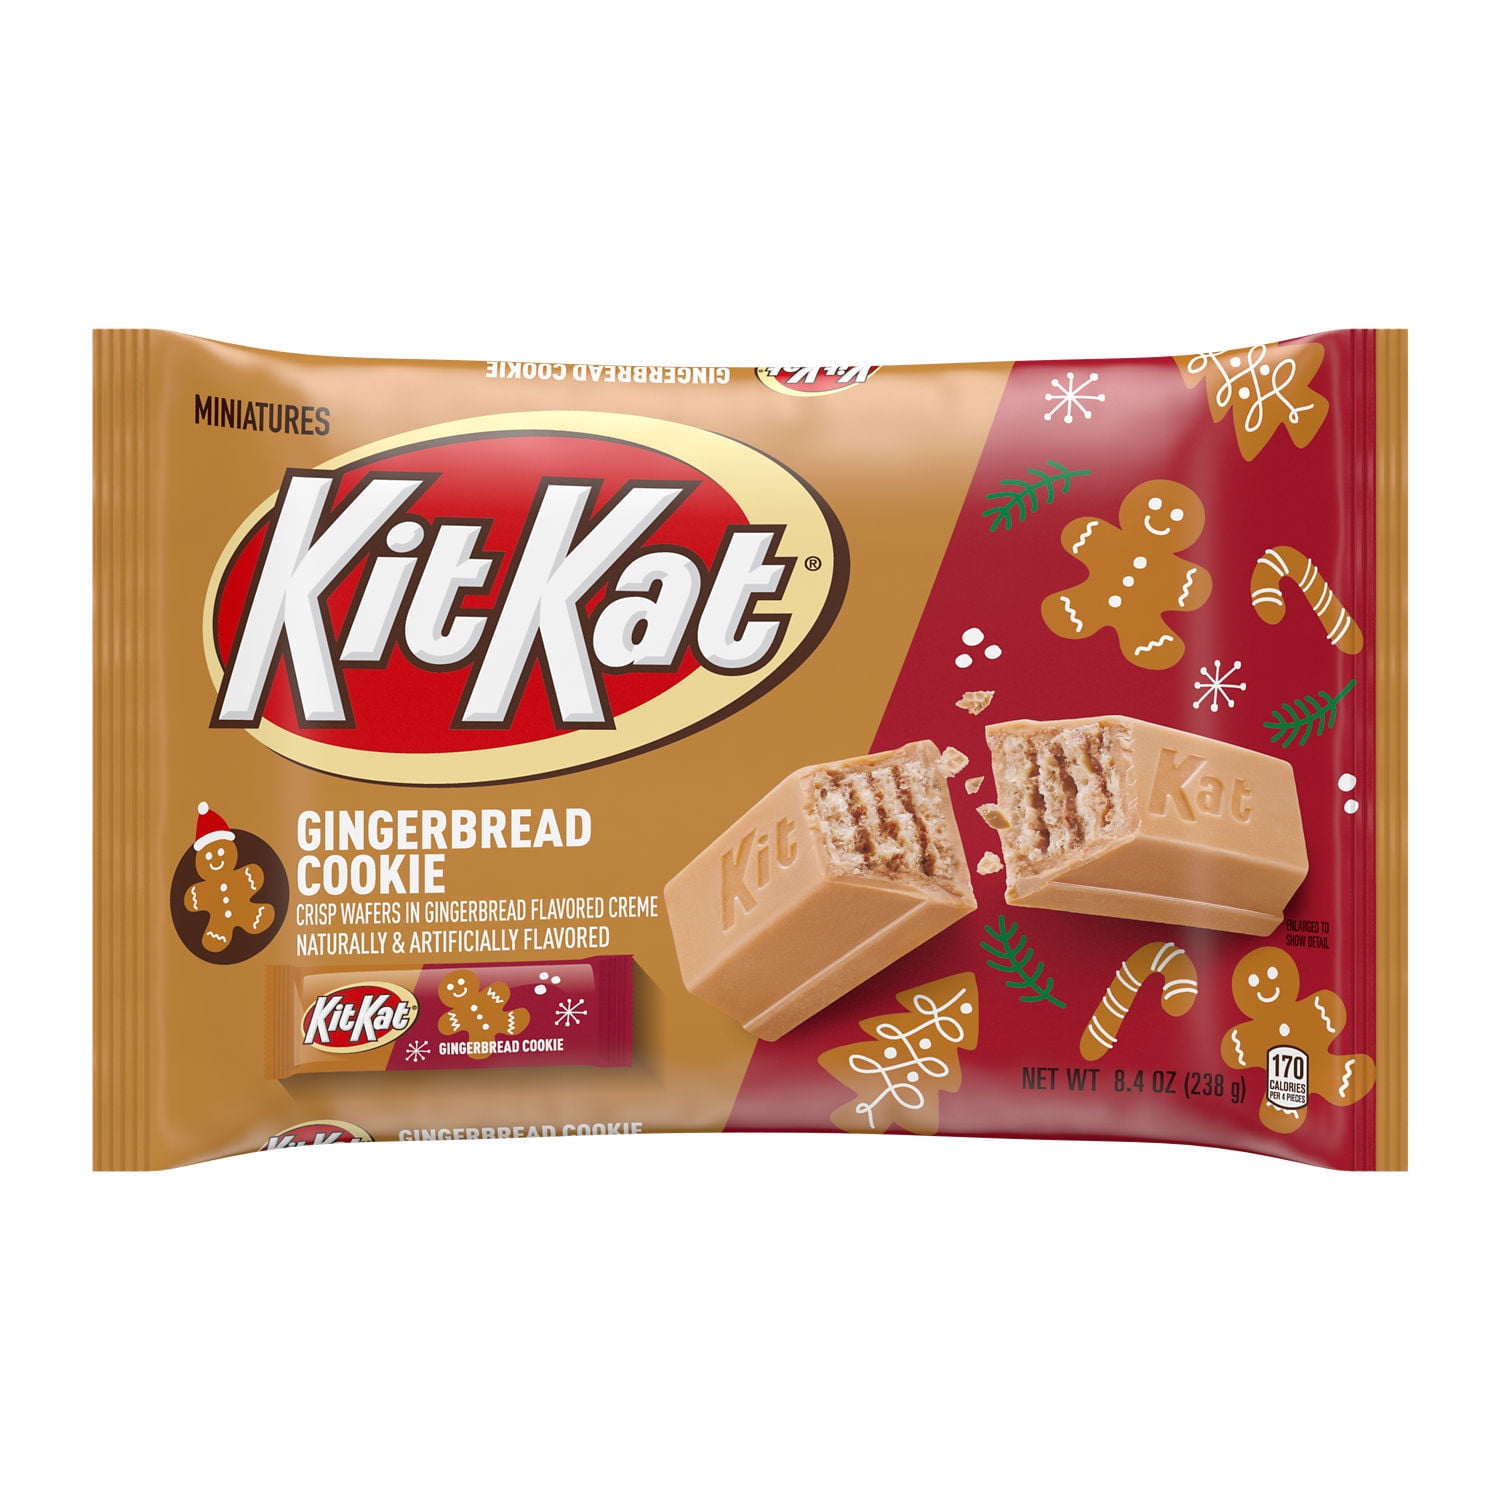 KITKAT KIT KAT®, Miniatures Gingerbread Cookie Gingerbread Flavored Creme Wafer Candy Bars, Christmas, 8.4 oz, Bag